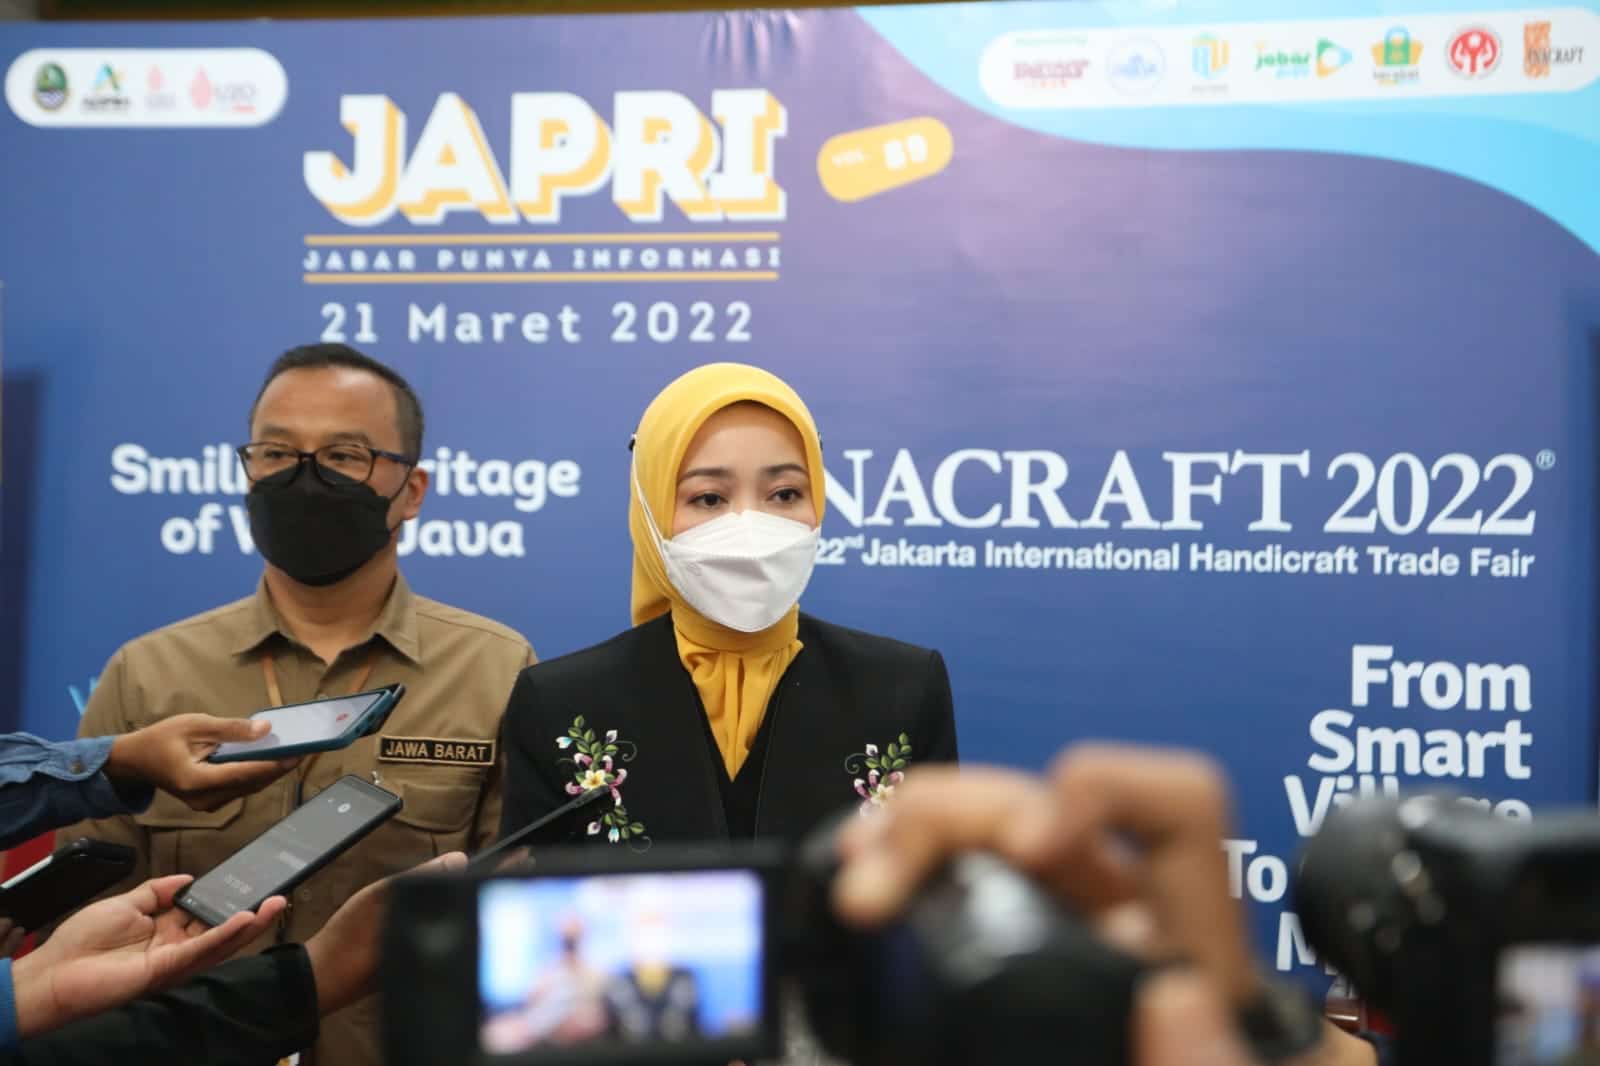 Jawa Barat Bakal Jadi Ikon Inacraft 2022, Atalia: Kita Sudah Sangat Siap